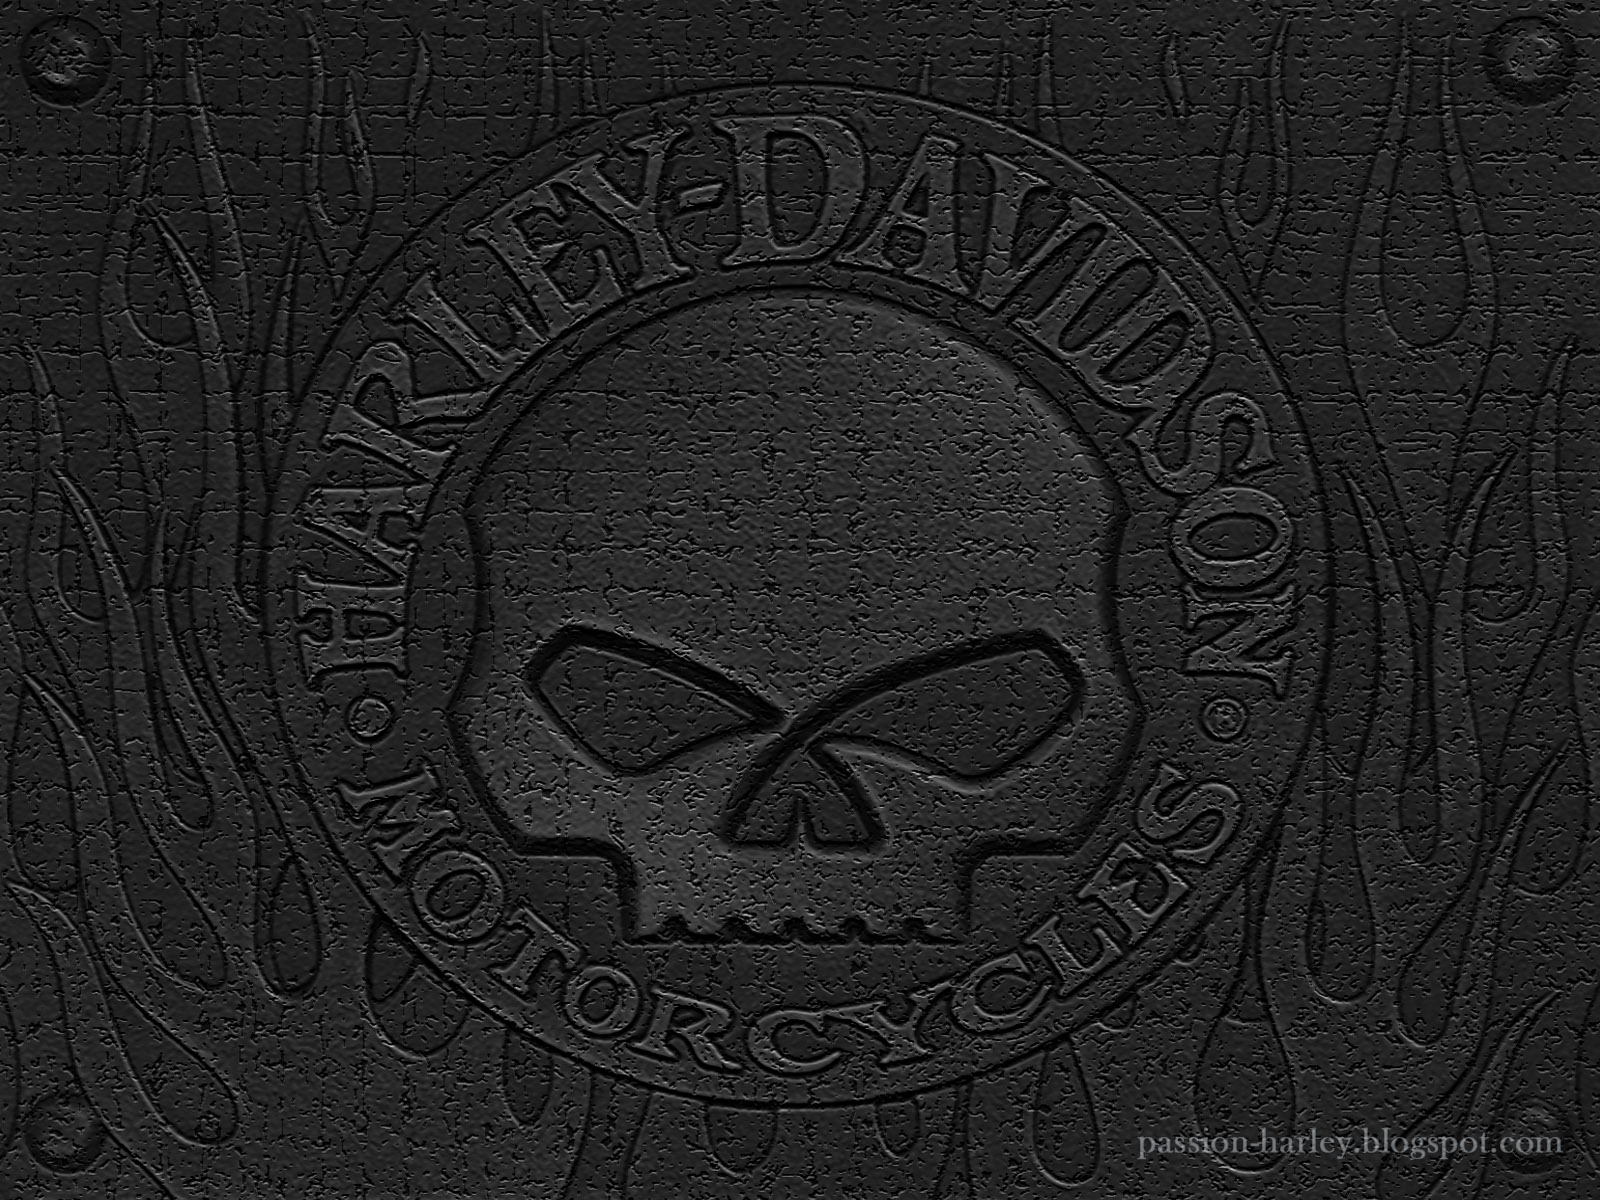 Harley Davidson Logo Wallpaper iPhone Reformwi Org